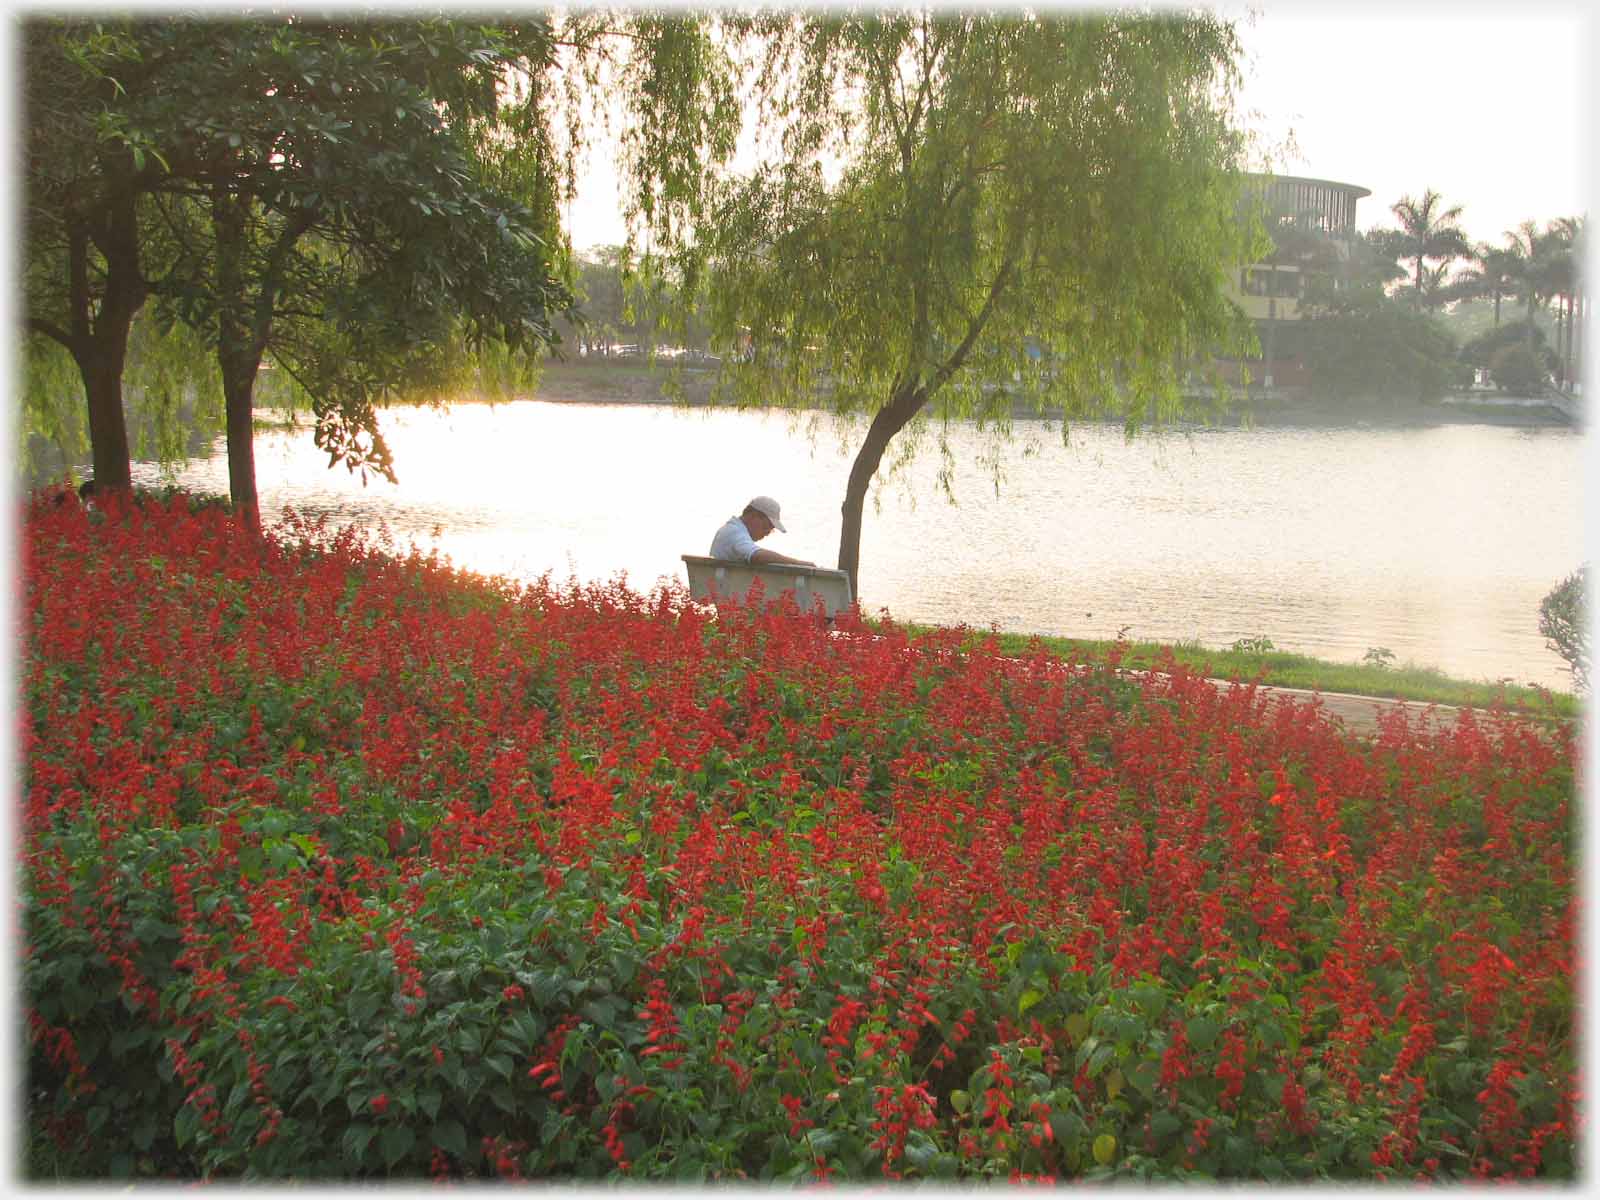 Man reading newspaper beyond dense bank of red flowers.